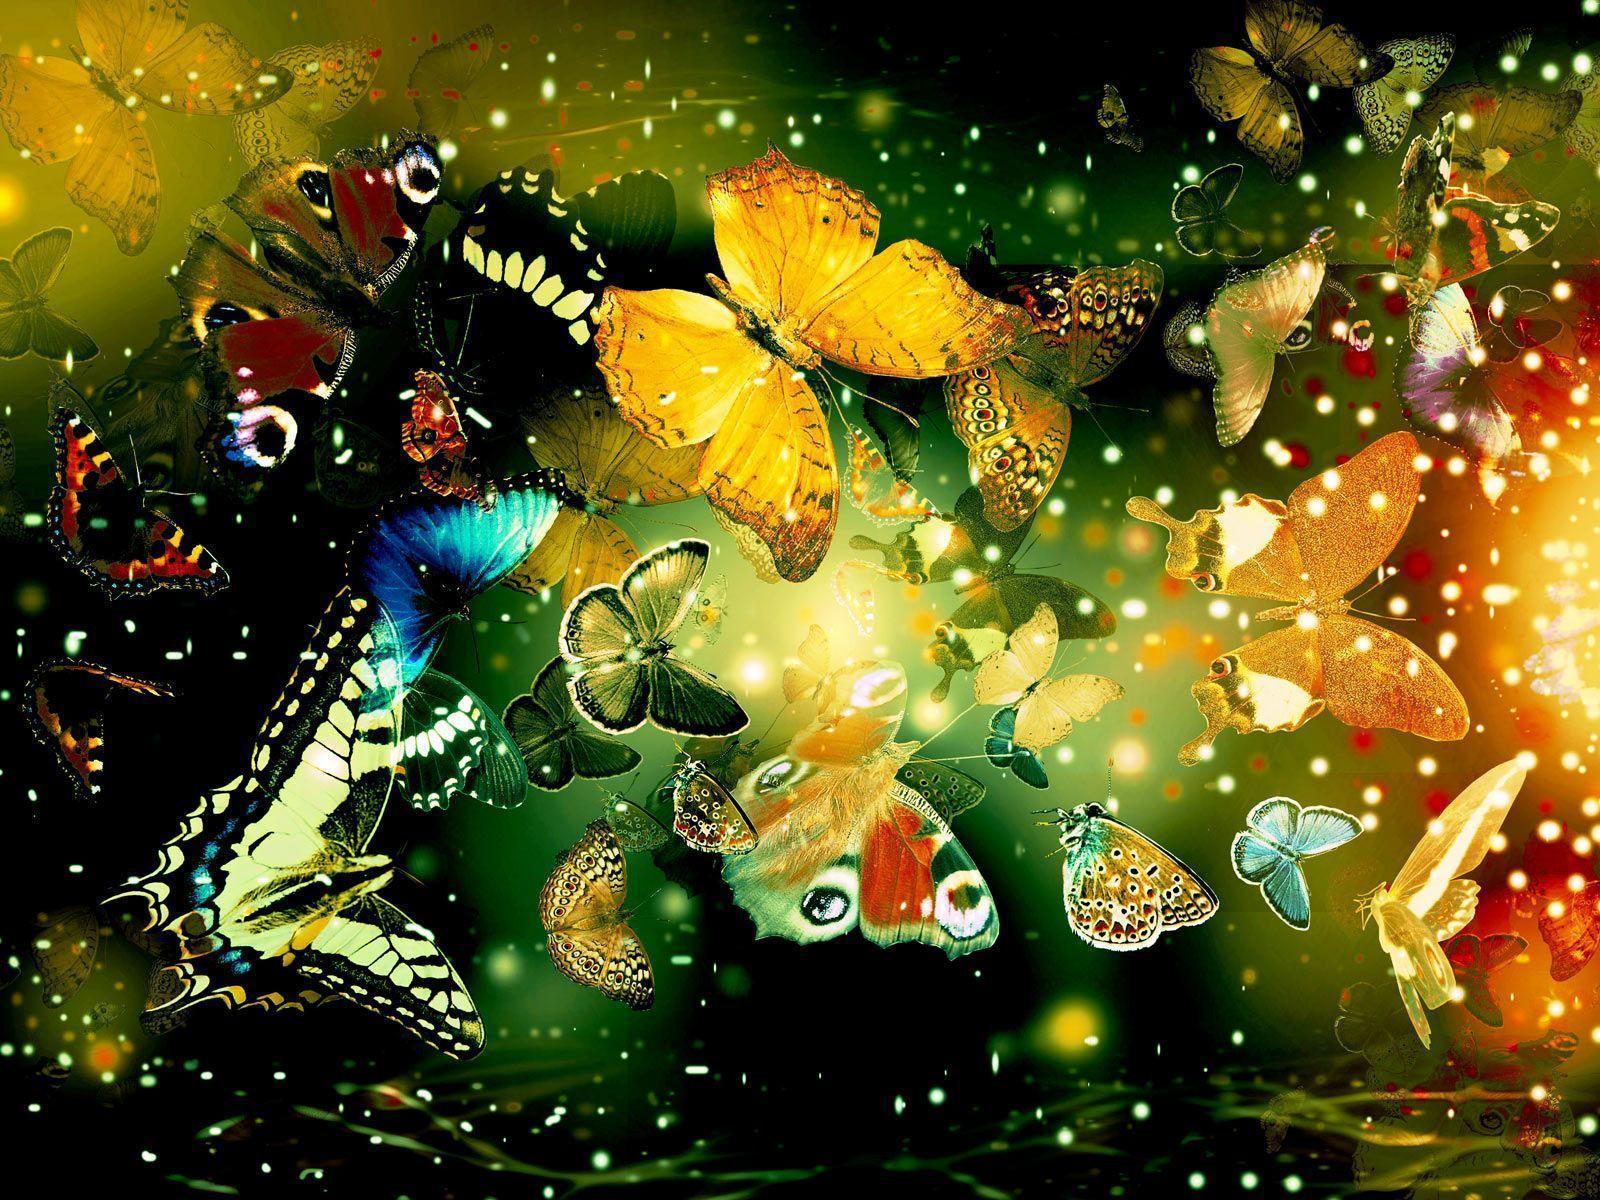 Desktop Wallpaper · Gallery · Windows 7 · Butterflies desktop